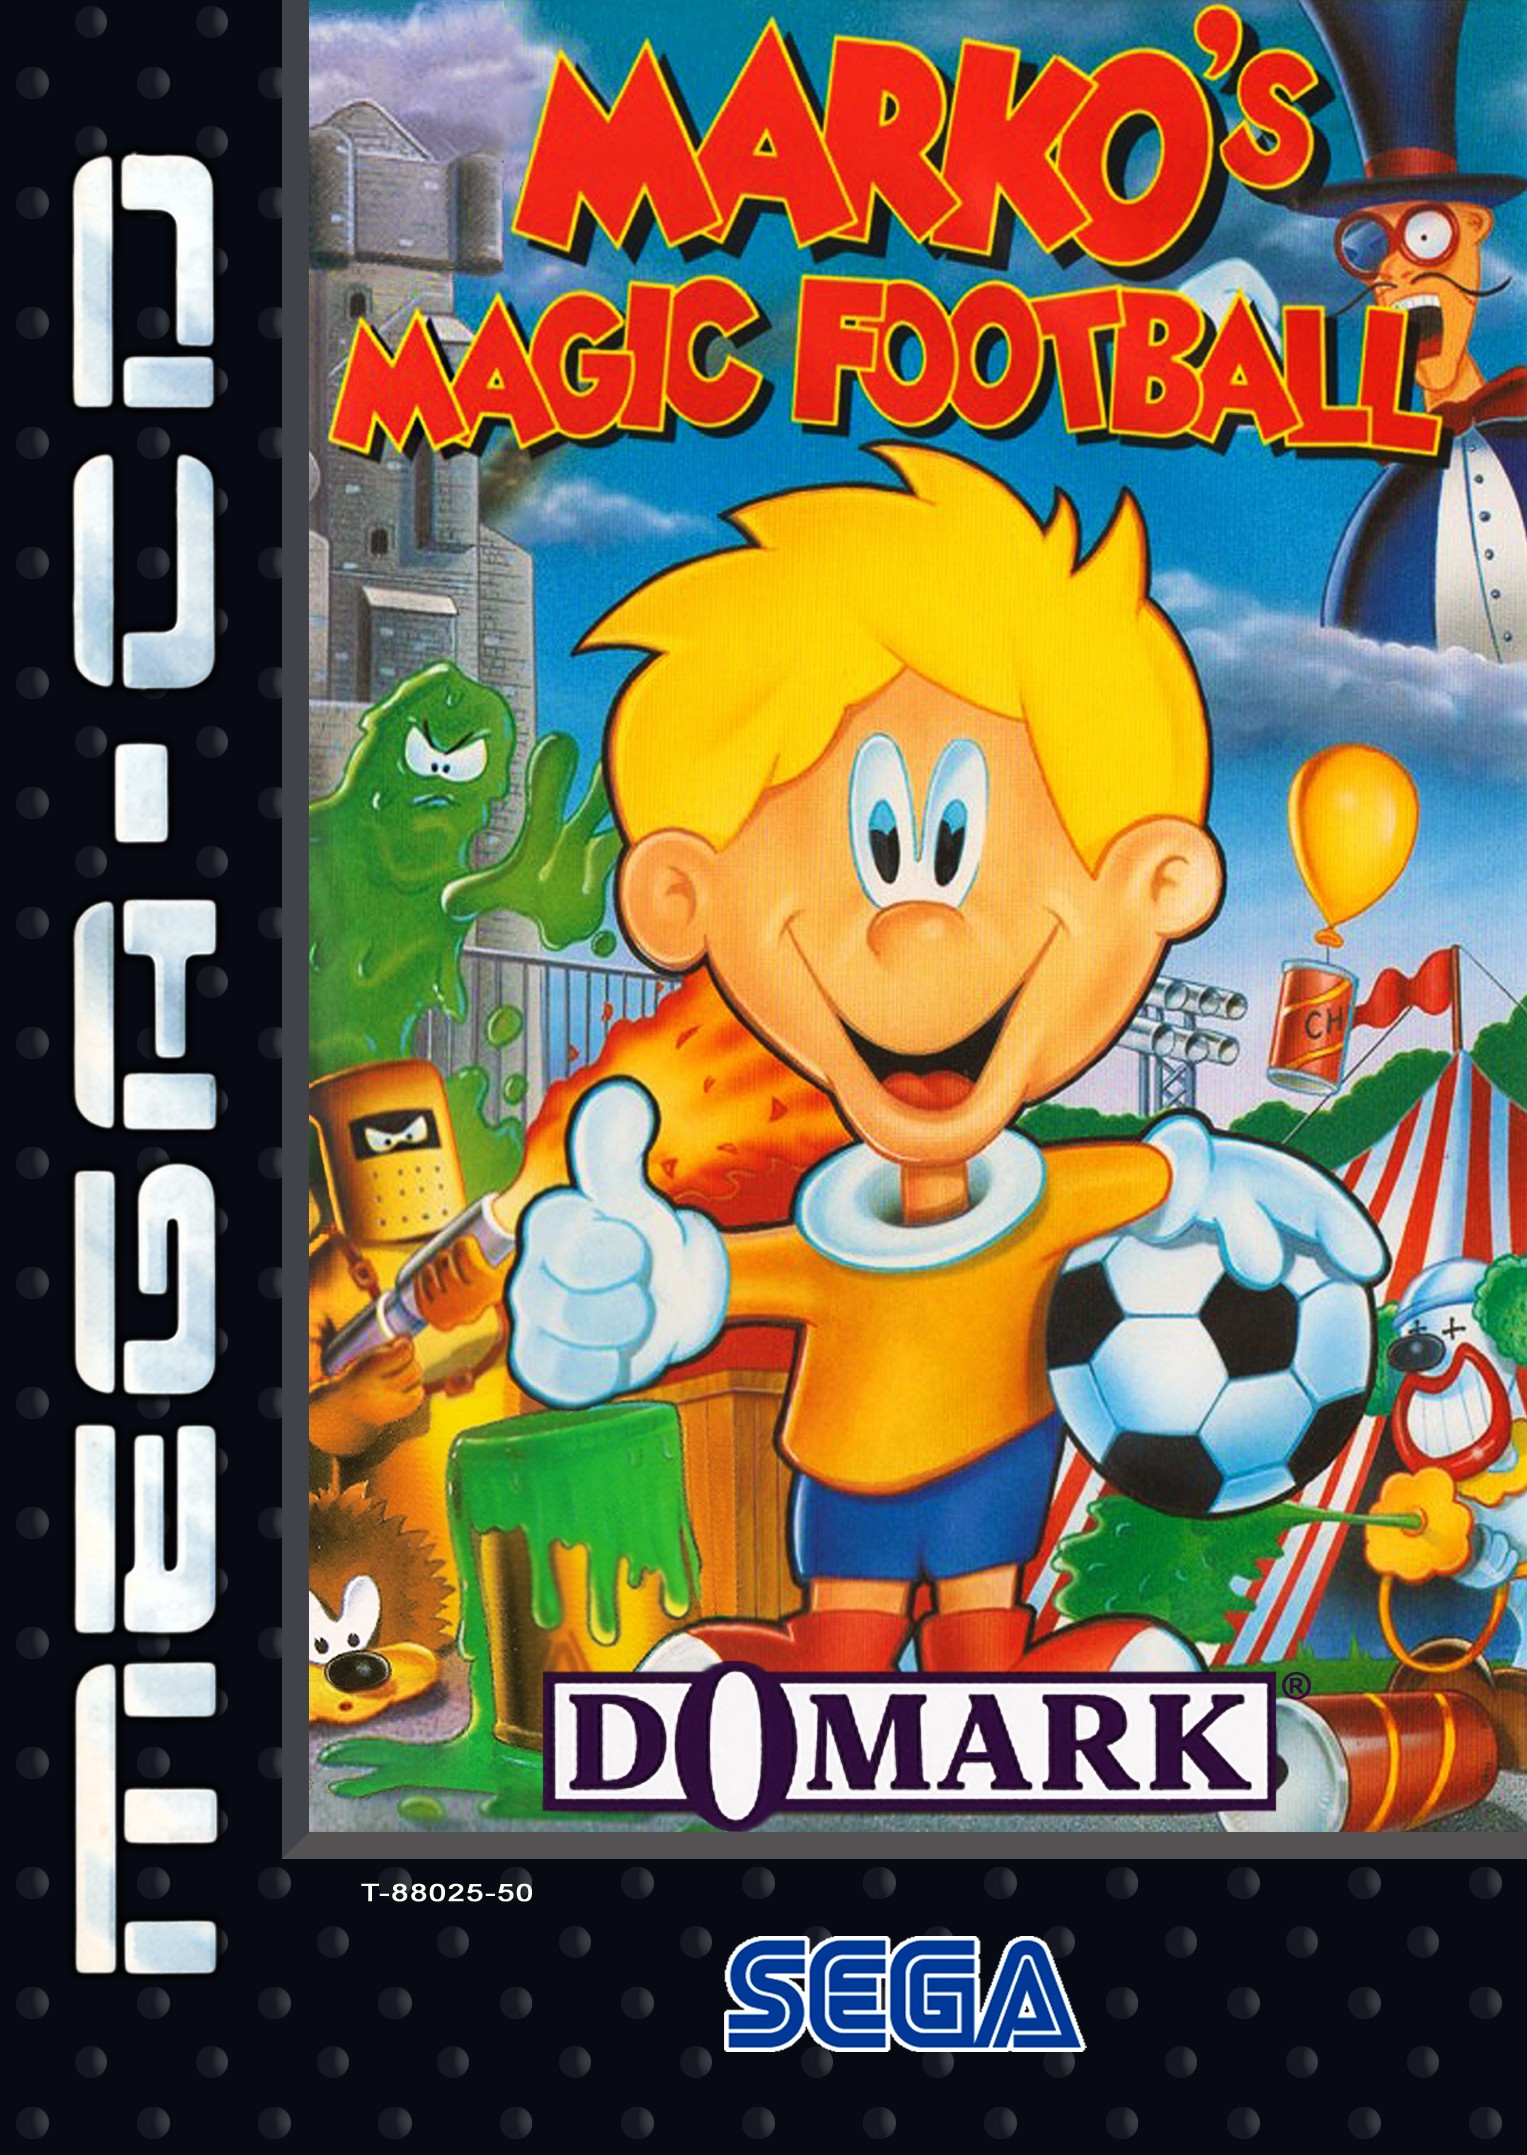 'Marko's Magic Football'